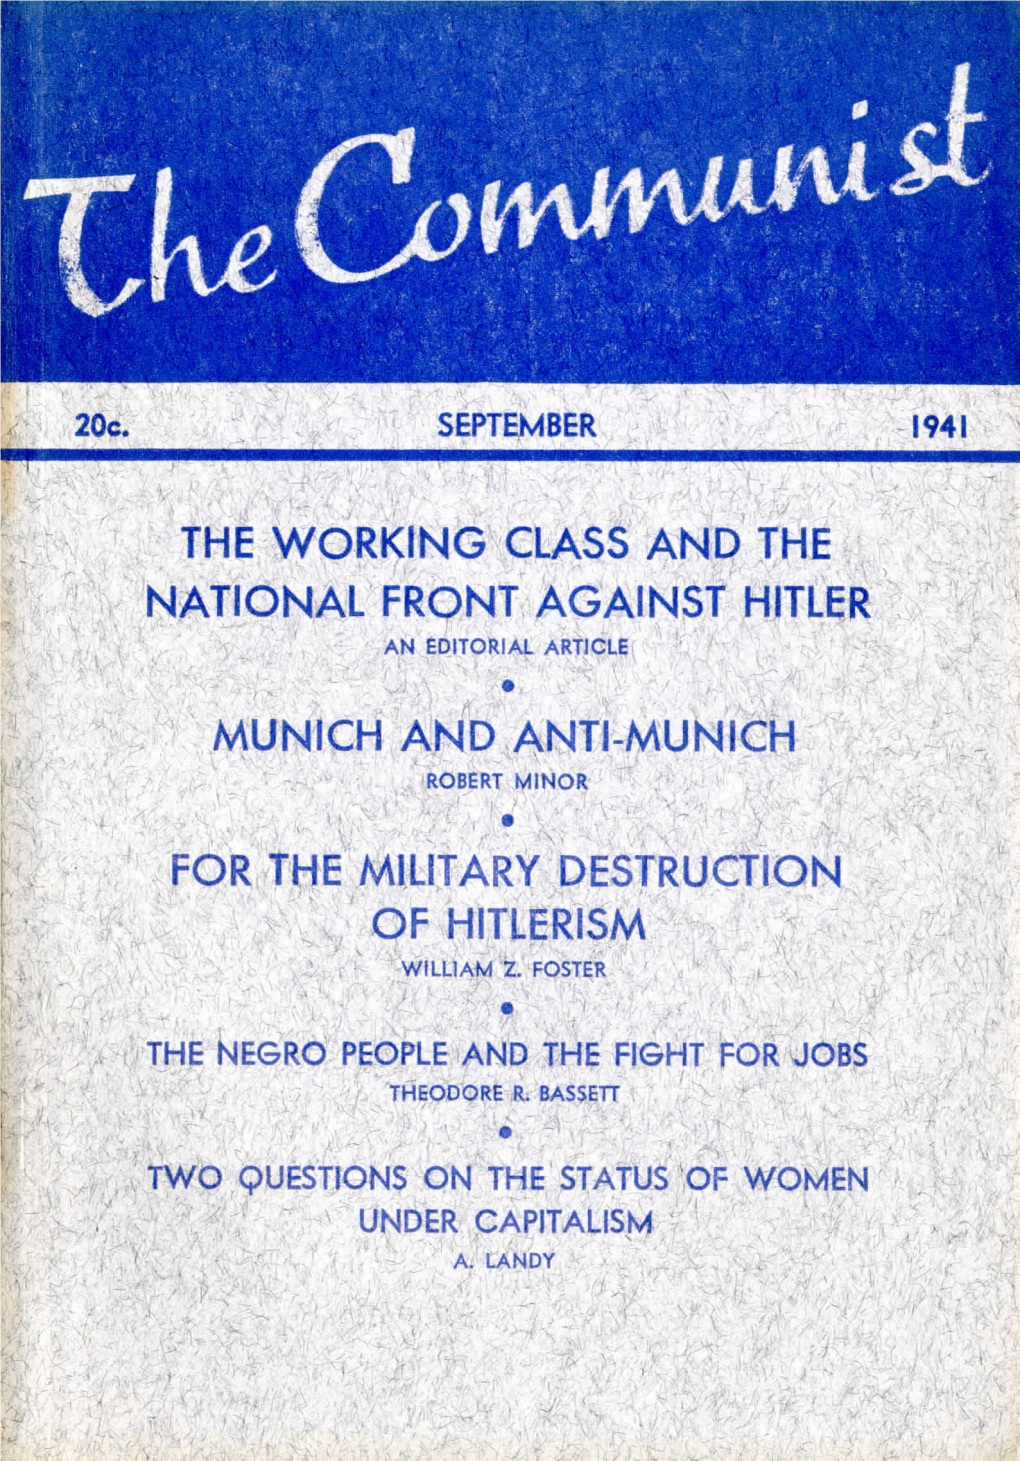 Volume 20 No. 9, September, 1941